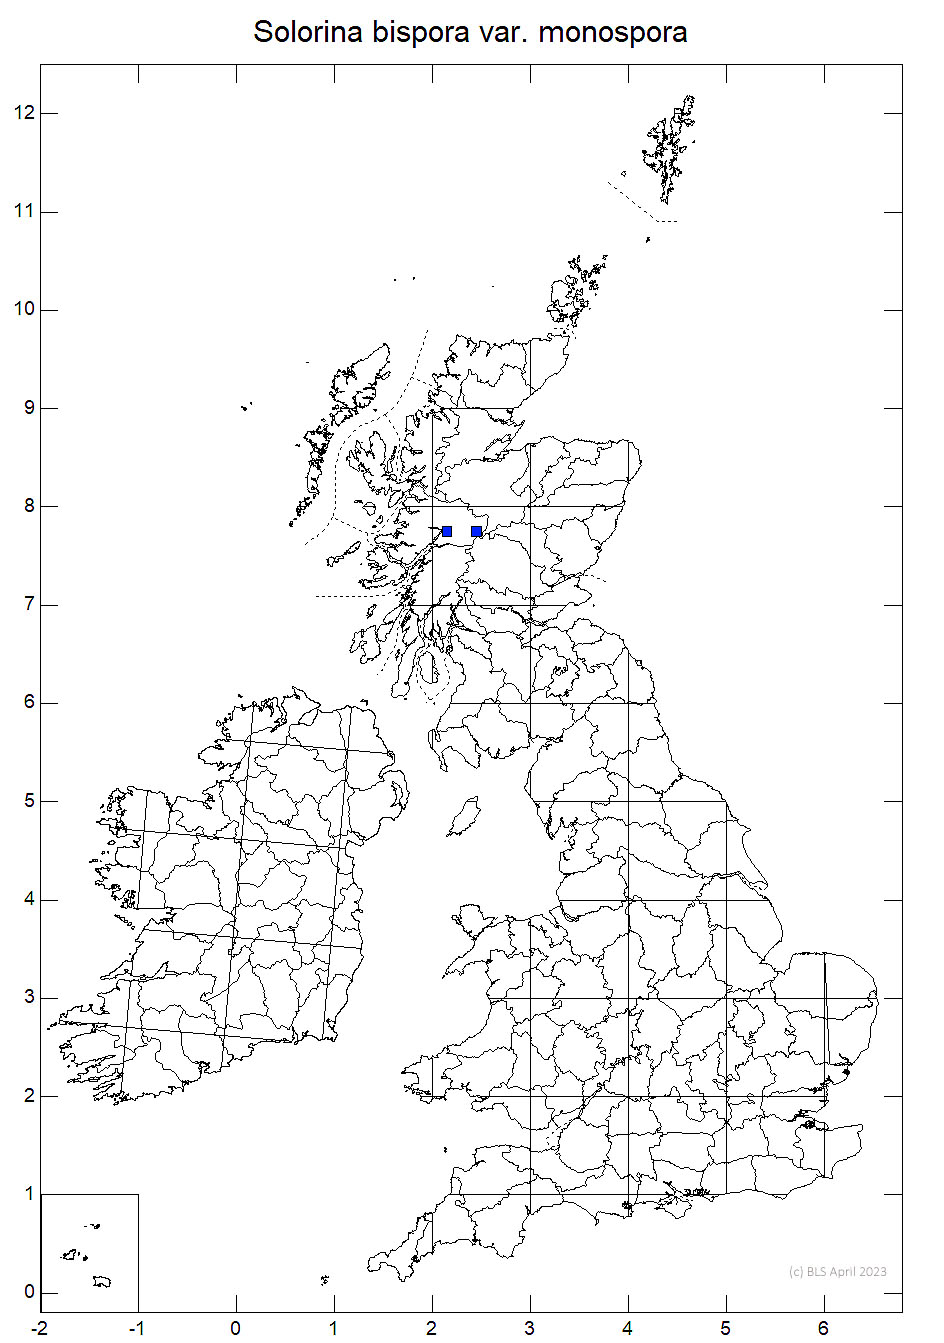 Solorina bispora var. monospora 10km sq distribution map